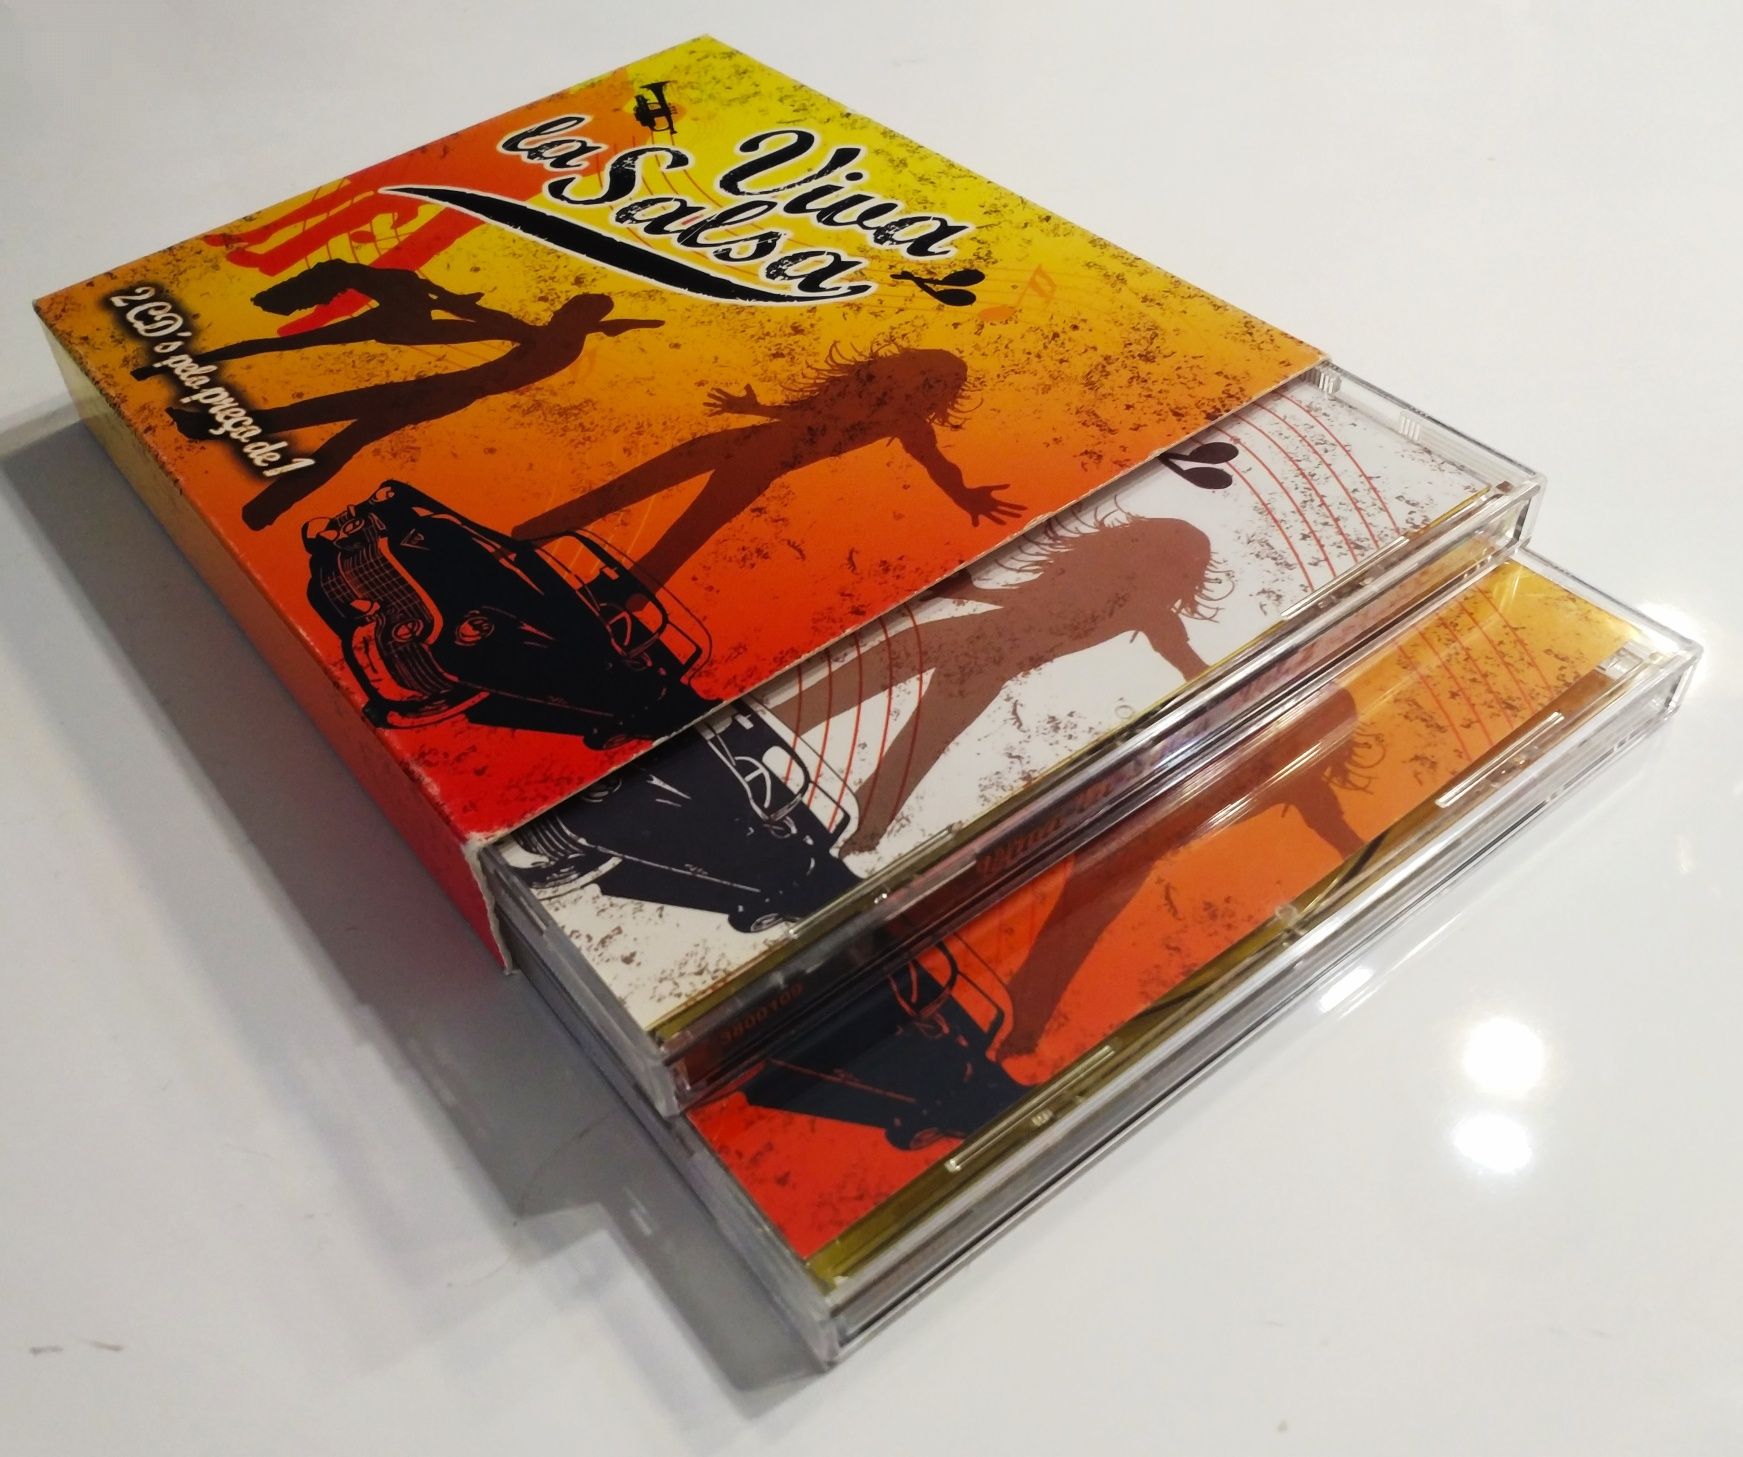 "Viva la Salsa" - 2 CDs - Compilação Best of